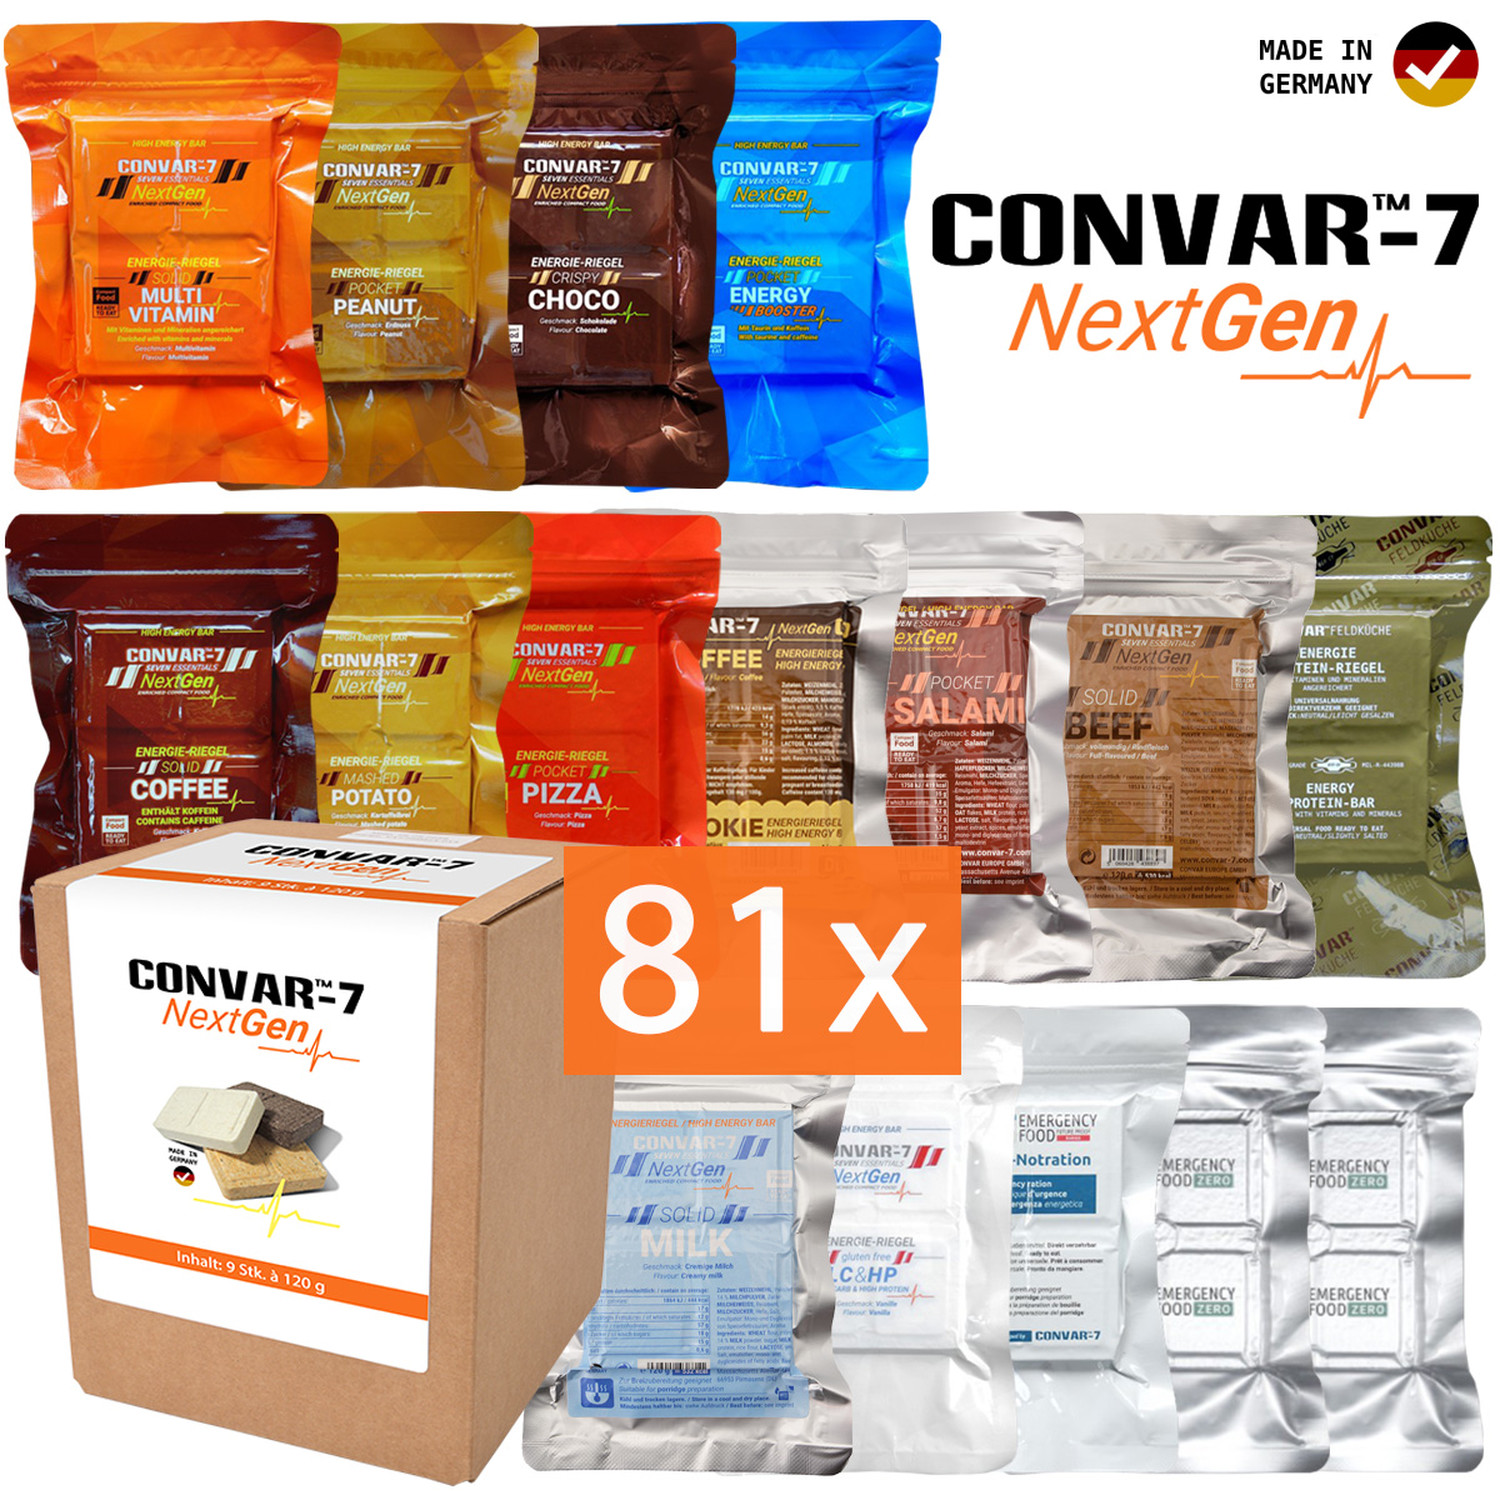 Convar-7 NextGen Energieriegel 81er Karton (81x 120 g) in neuen Geschmacksrichtungen